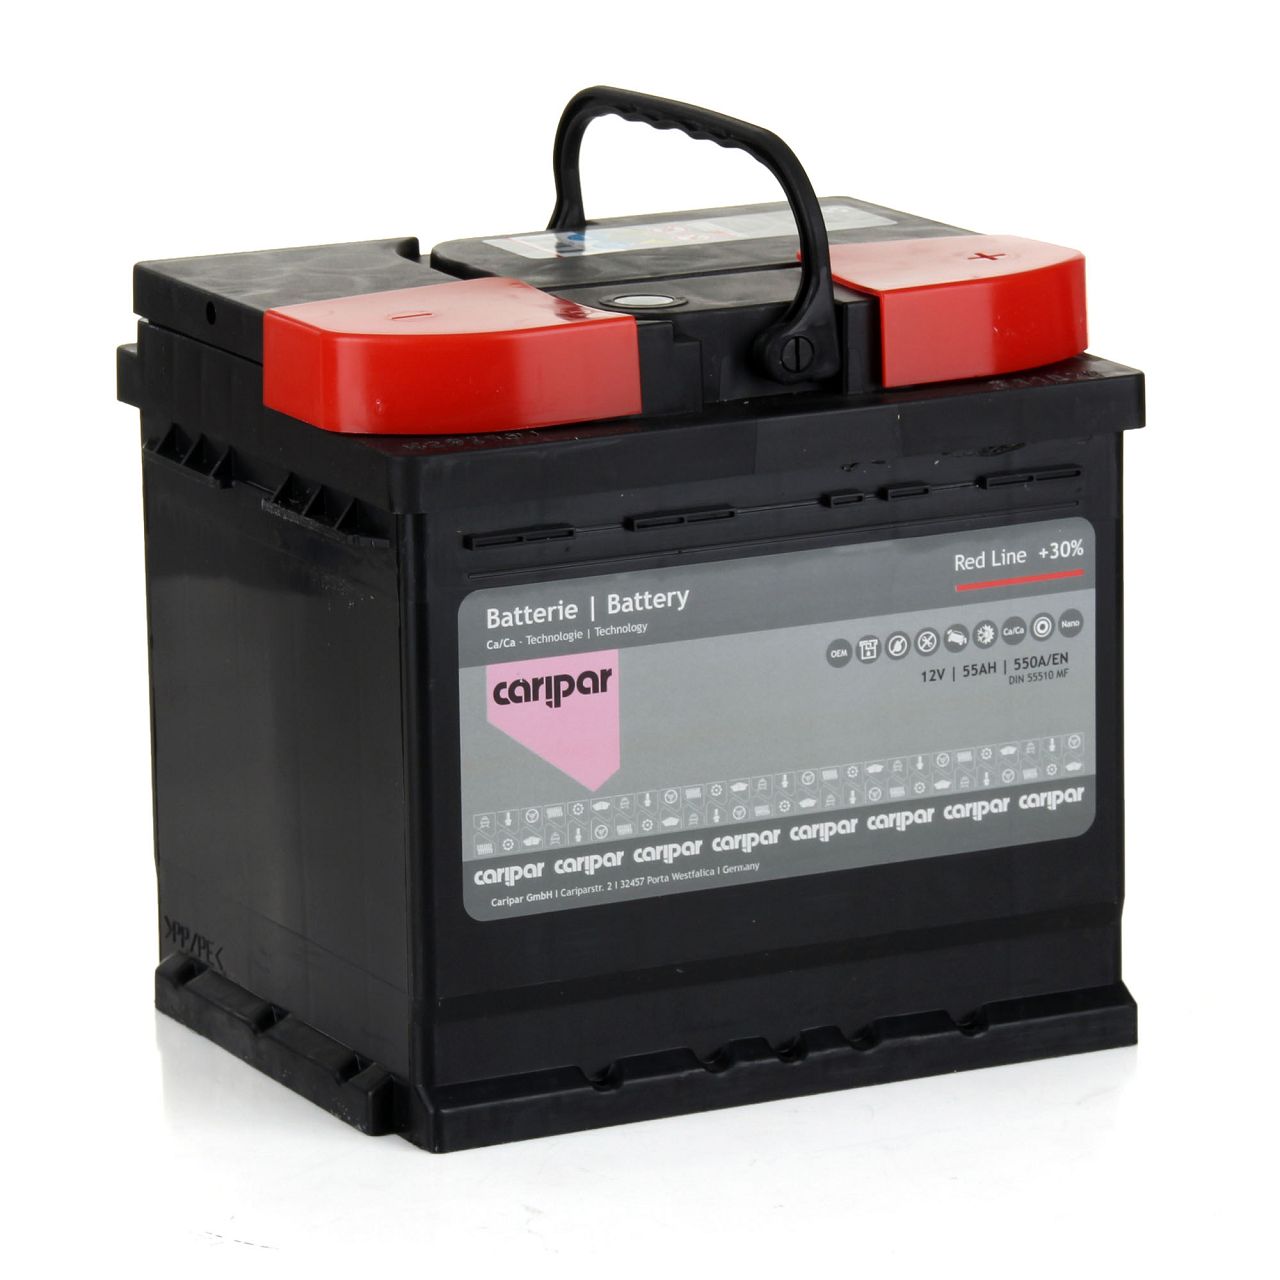 CARIPAR RED LINE +30% PKW KFZ Autobatterie Starterbatterie 12V 55Ah 550A/EN B13